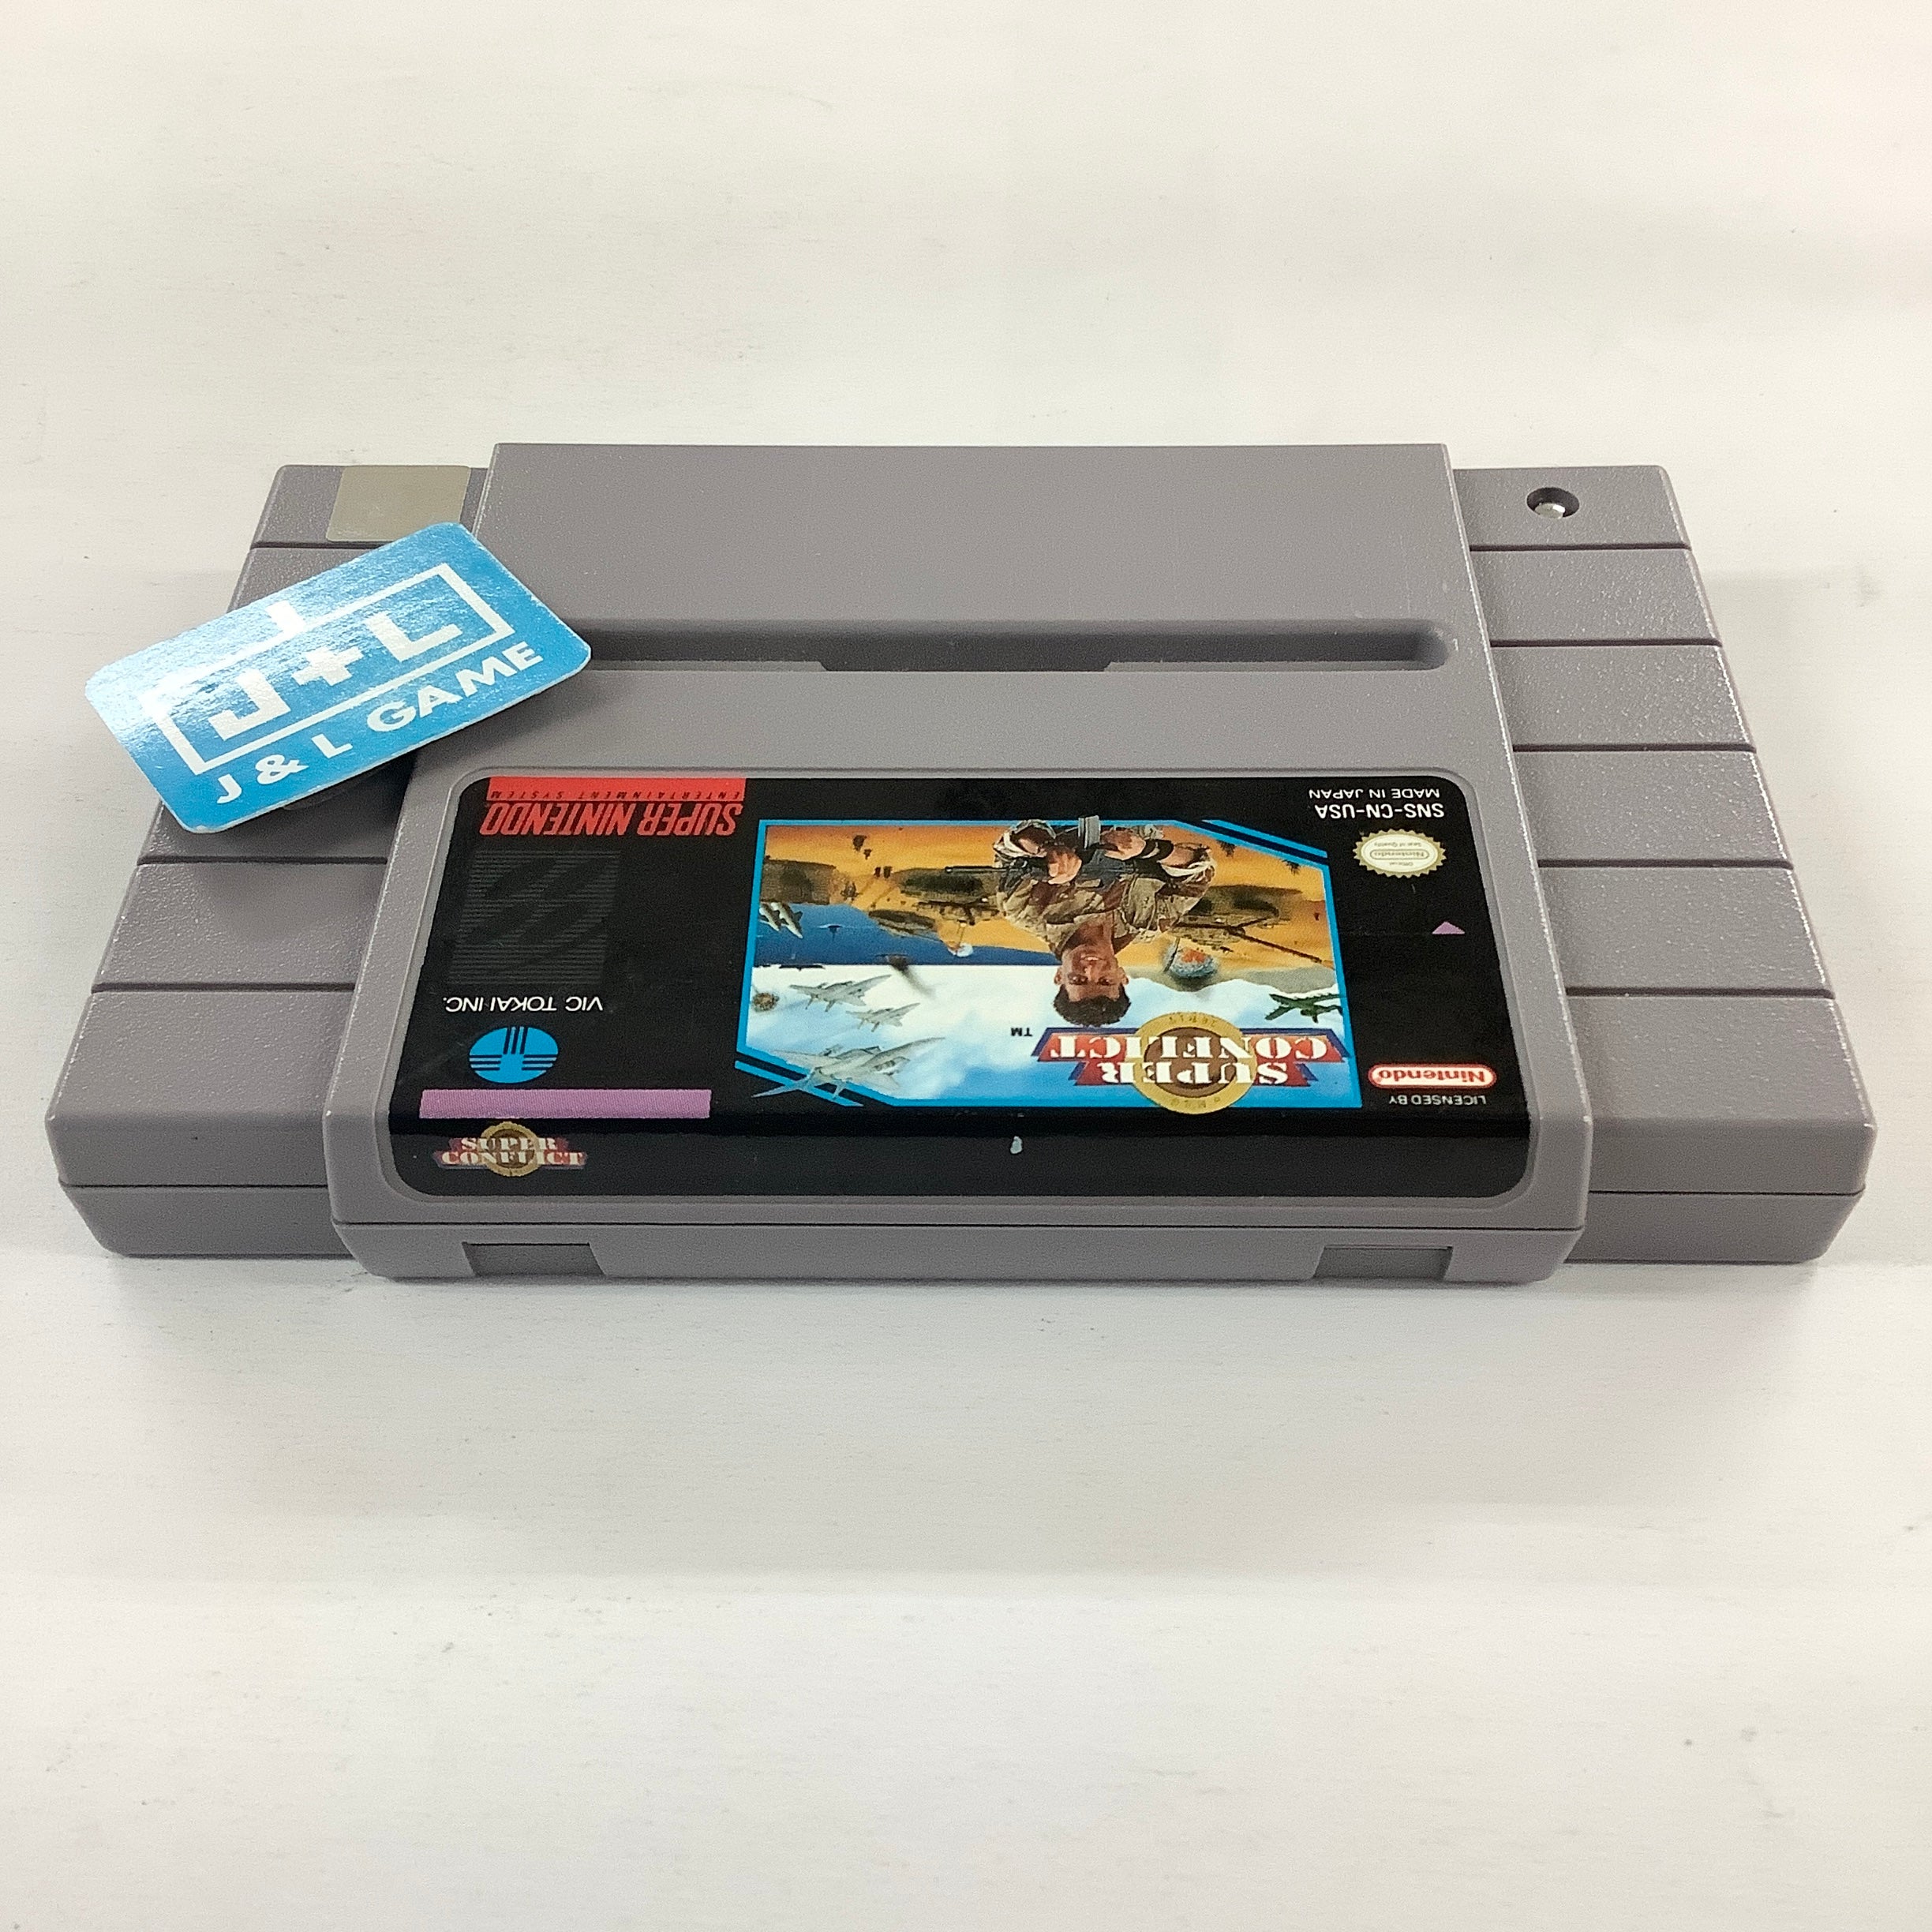 Super Conflict - (SNES) Super Nintendo [Pre-Owned] Video Games Vic Tokai   